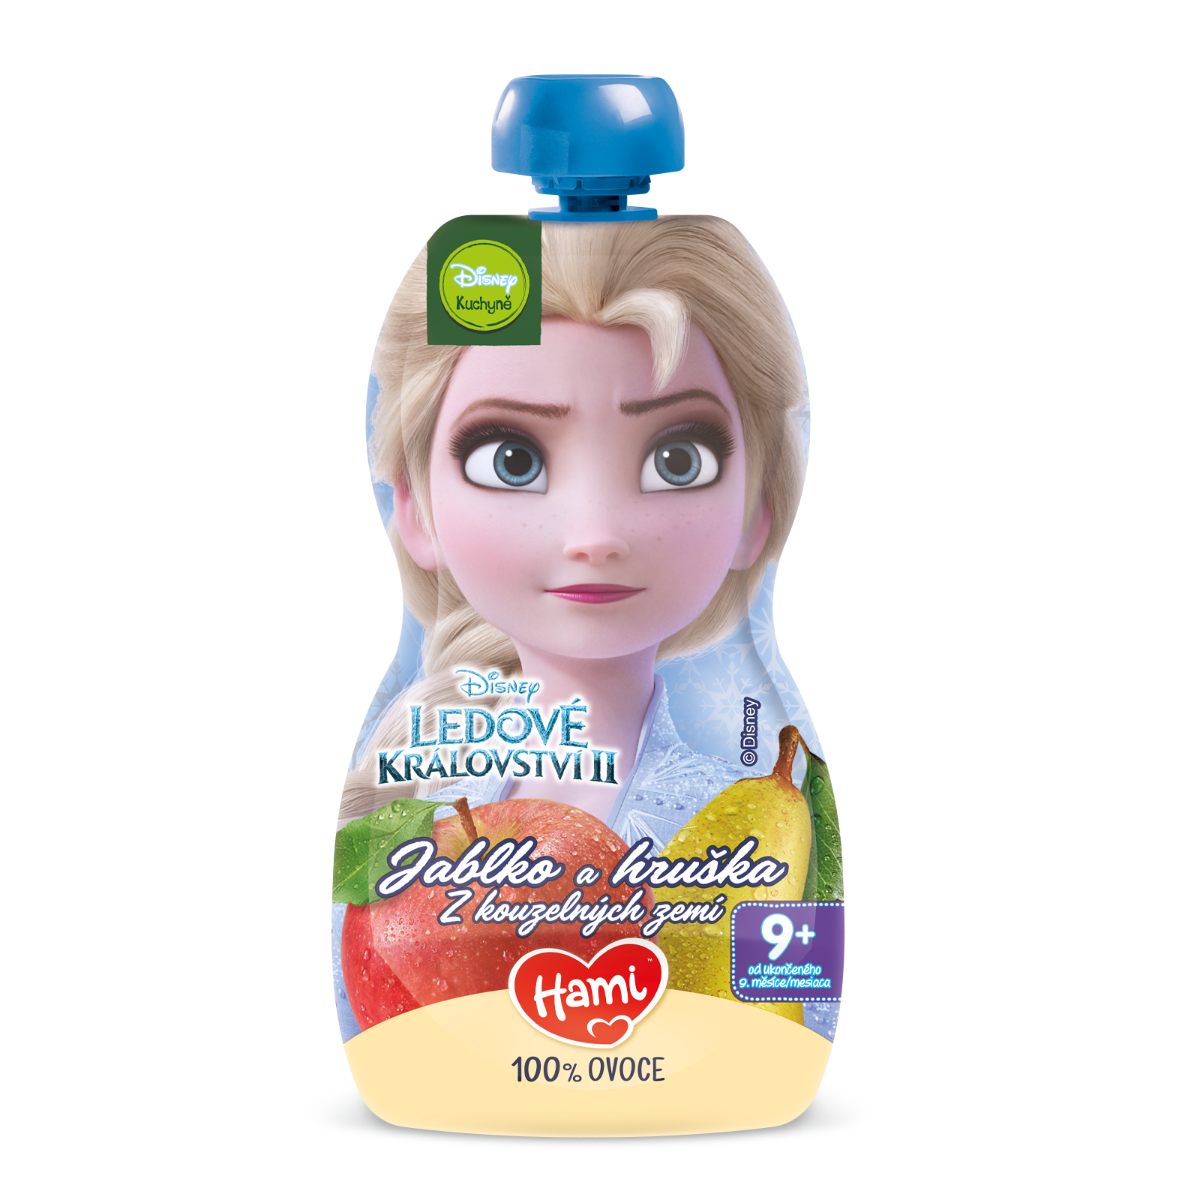 Hami Disney Frozen Hruška Elsa 9+ ovocná kapsička 110 g Hami